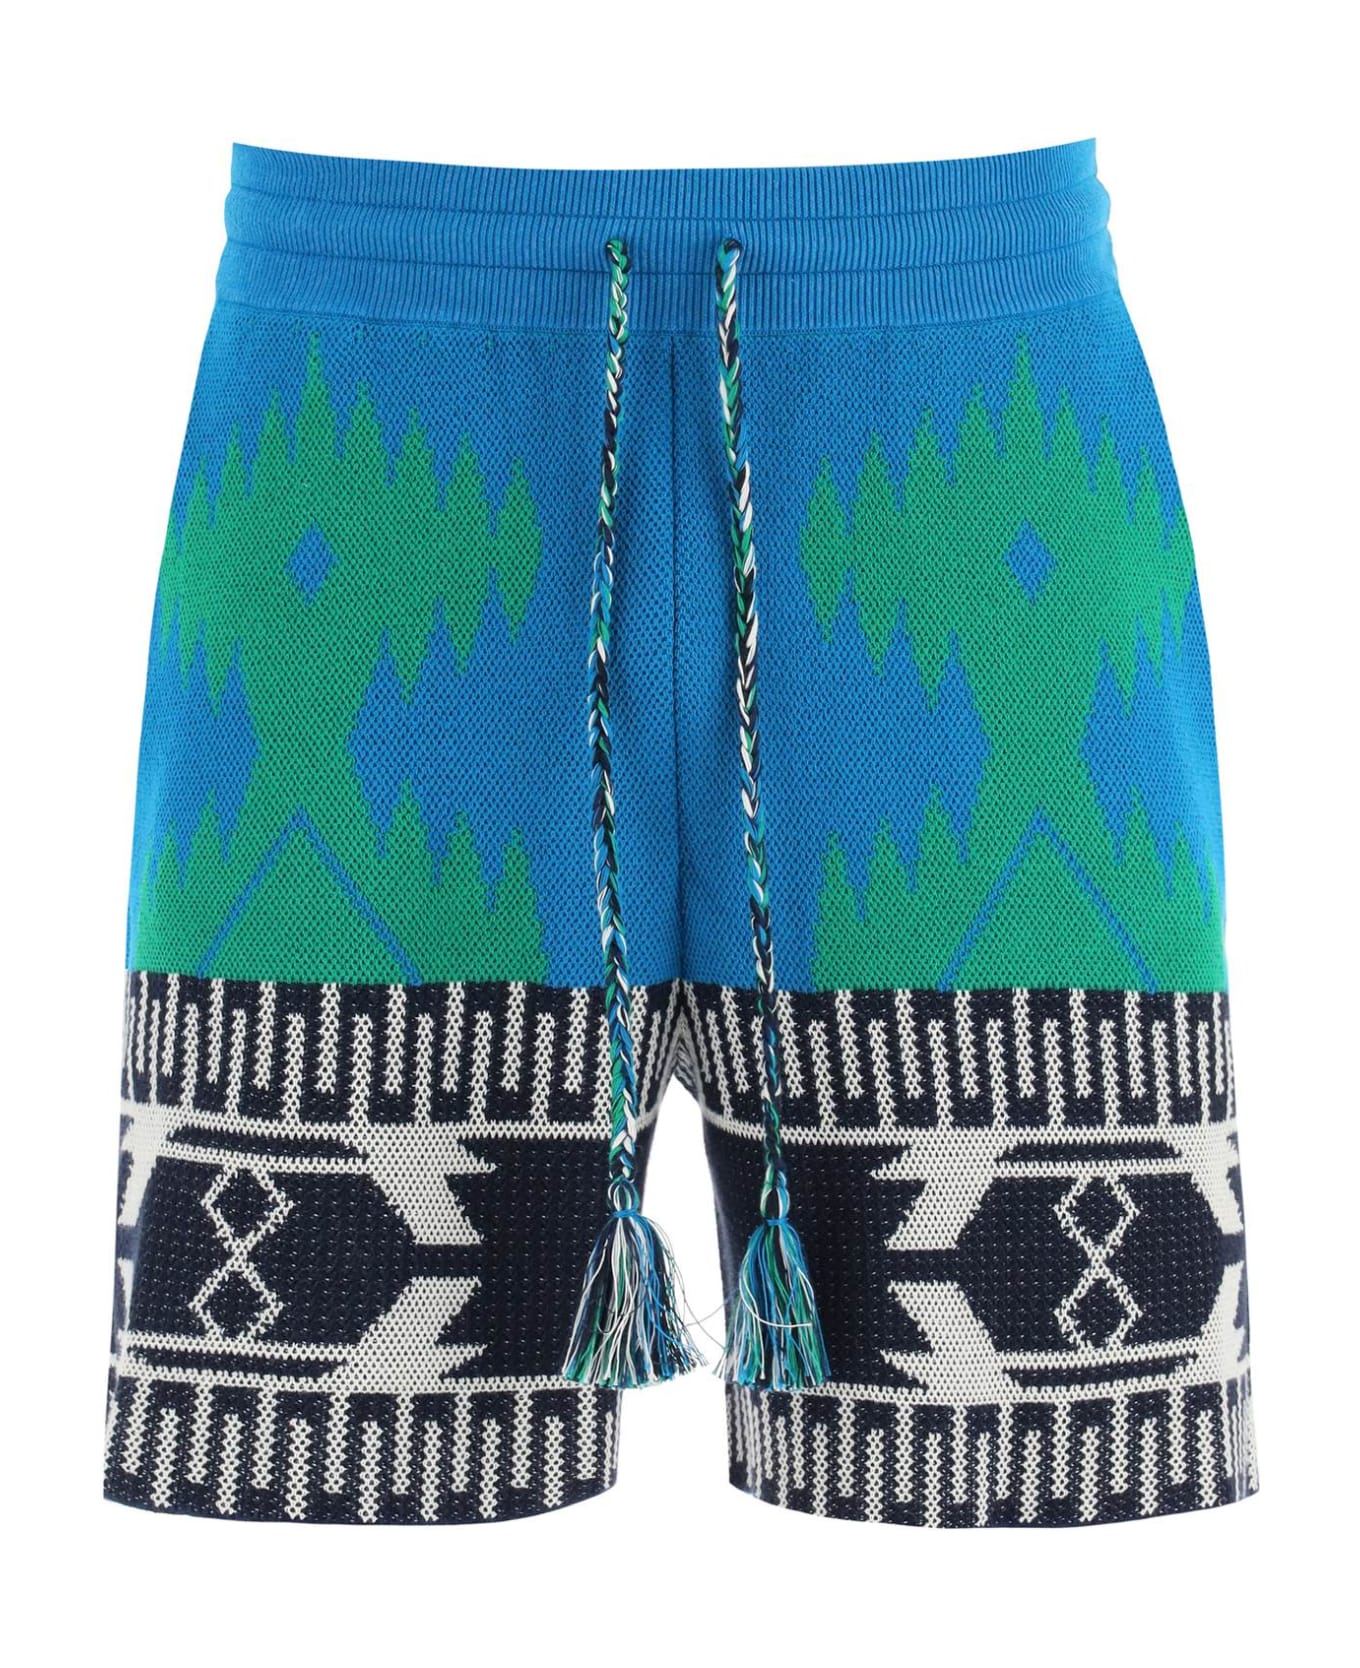 Alanui Jacquard Cotton Icon Shorts - BLUE FOREST GREEN (Light blue)